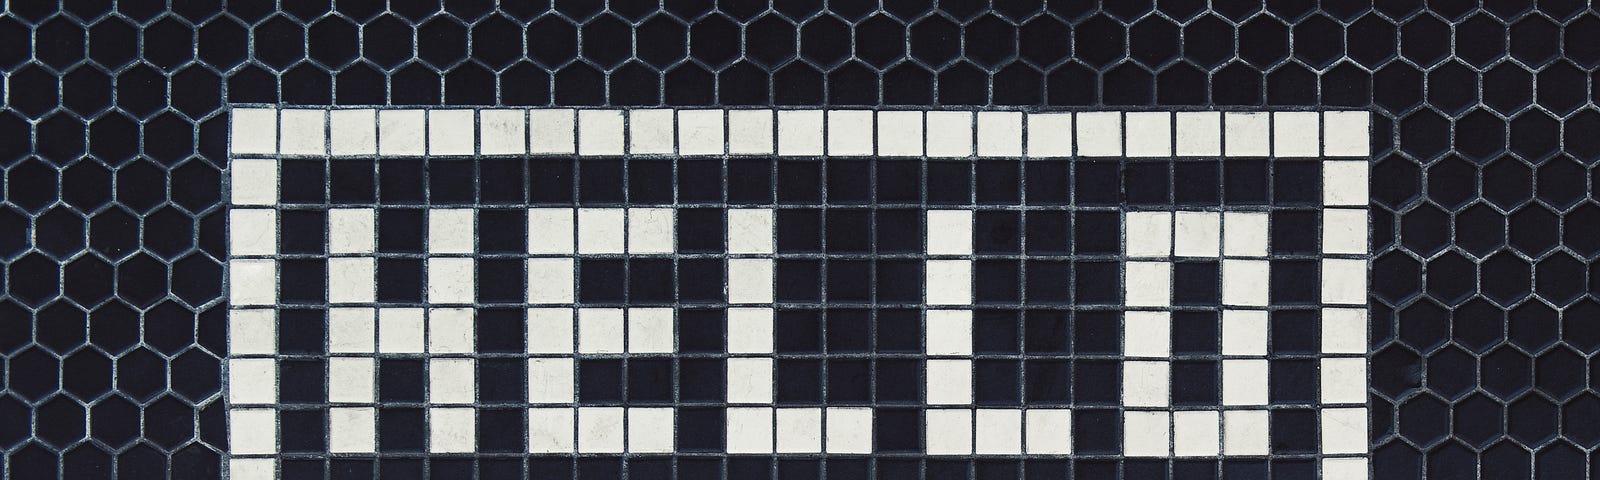 dark mosaic tile floor that spells the word HELLO in lighter color tile